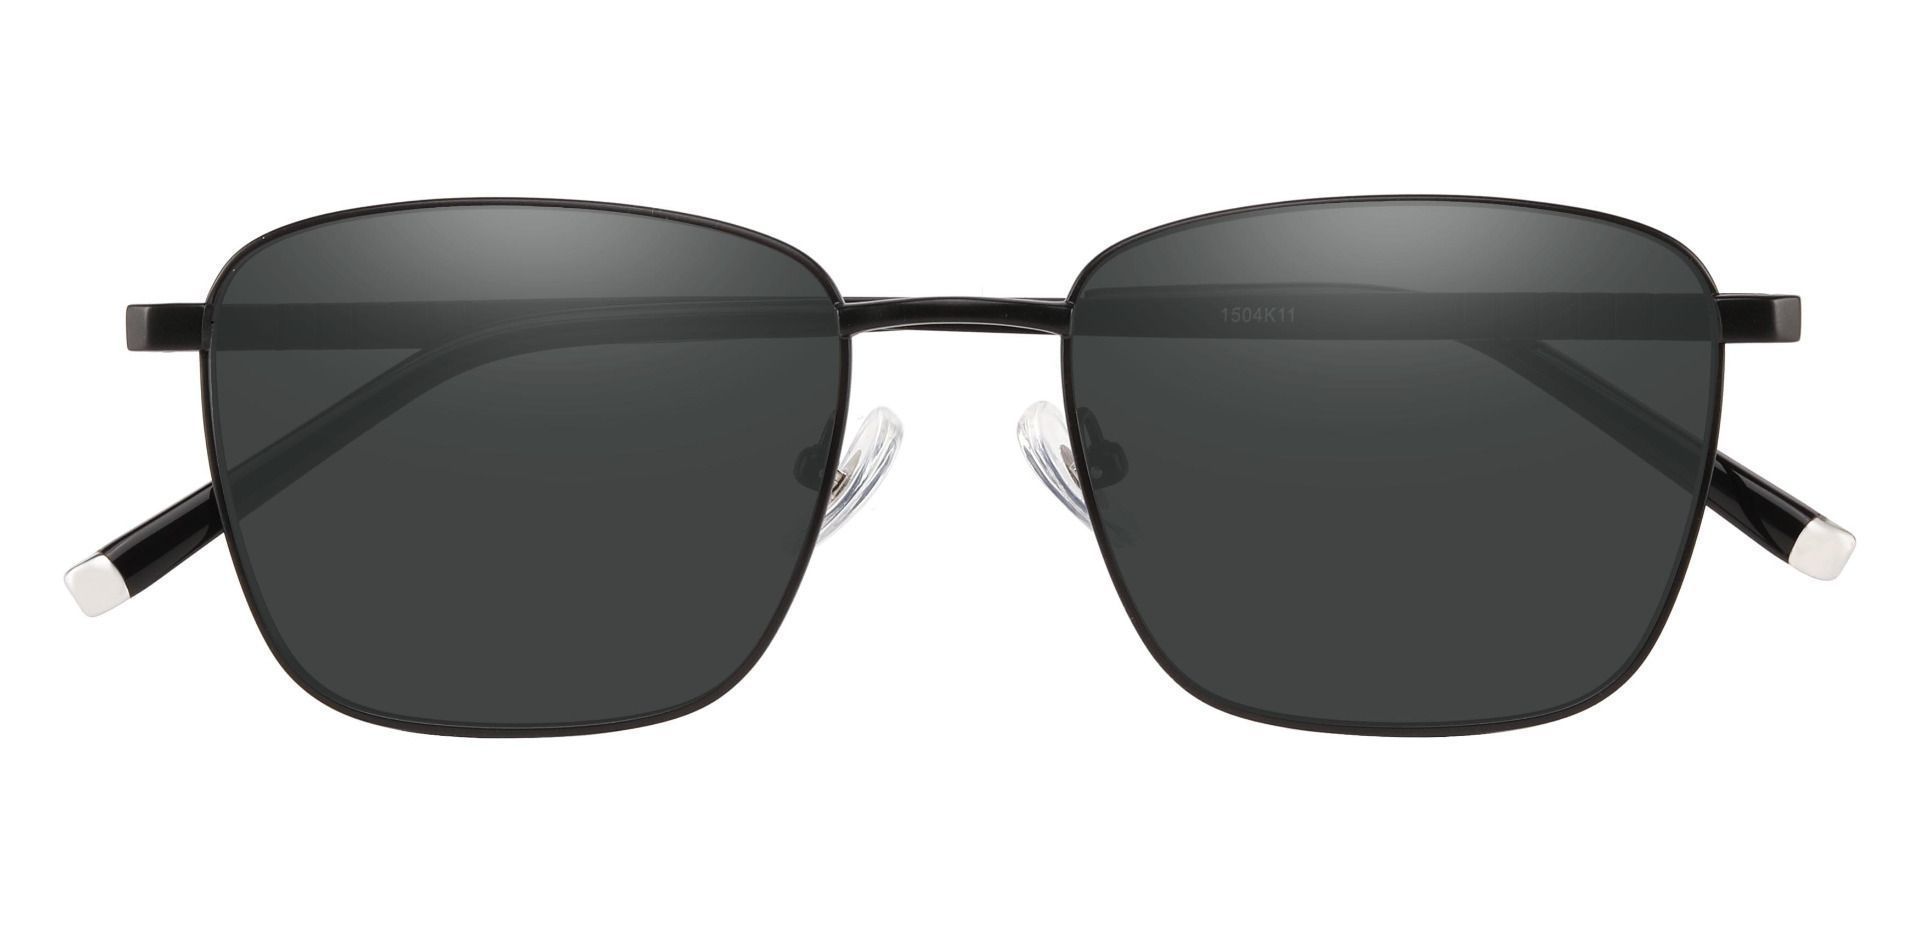 May Square Prescription Sunglasses - Black Frame With Gray Lenses